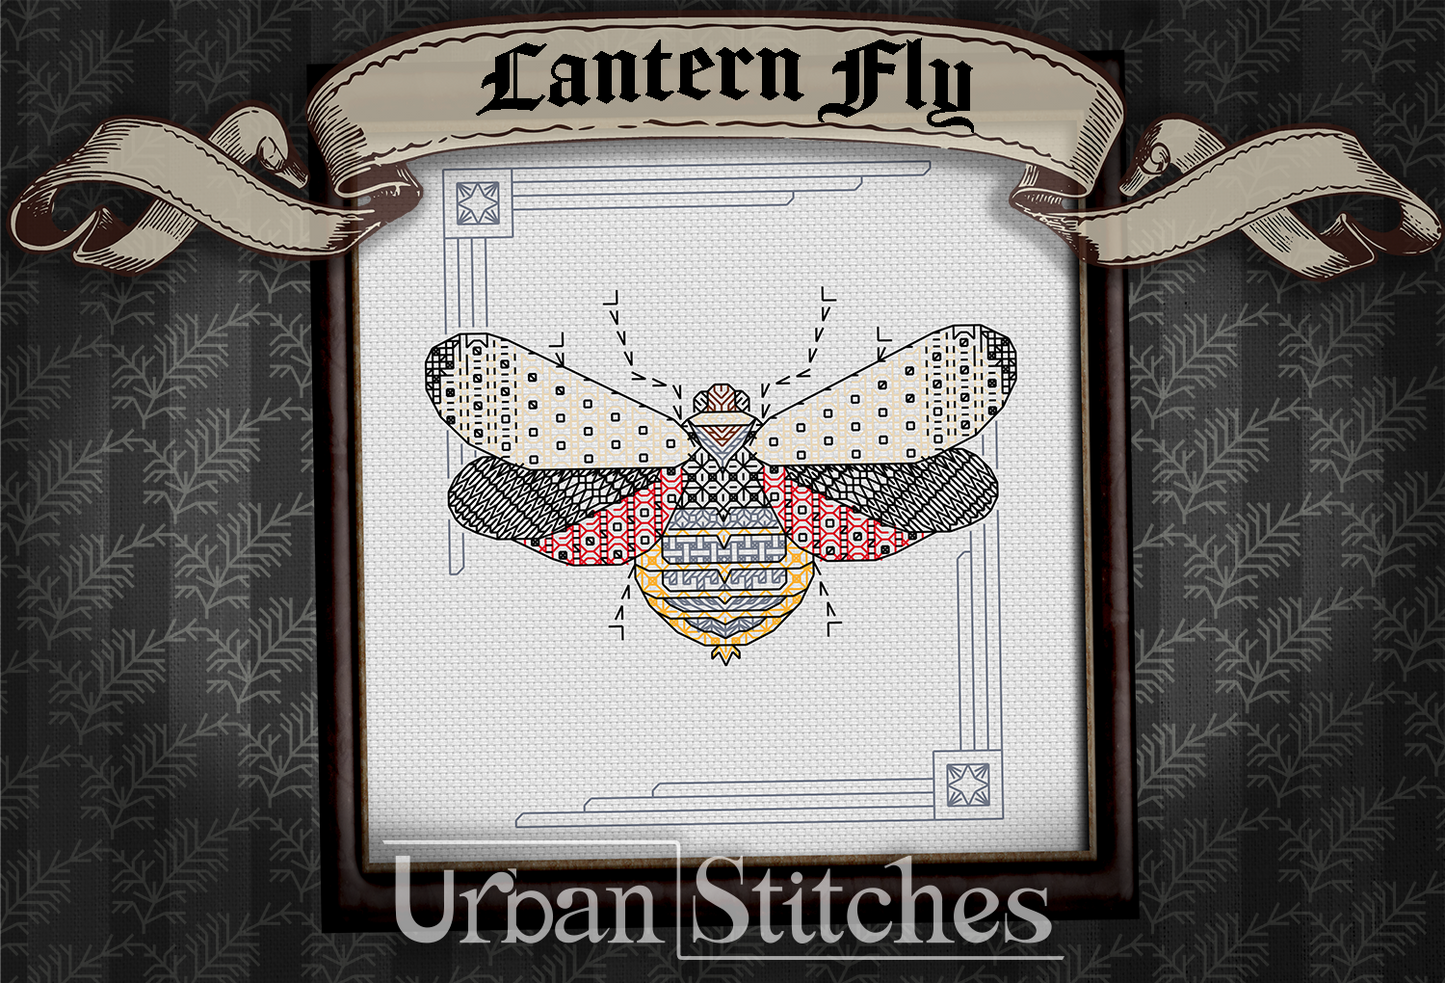 Lantern Fly